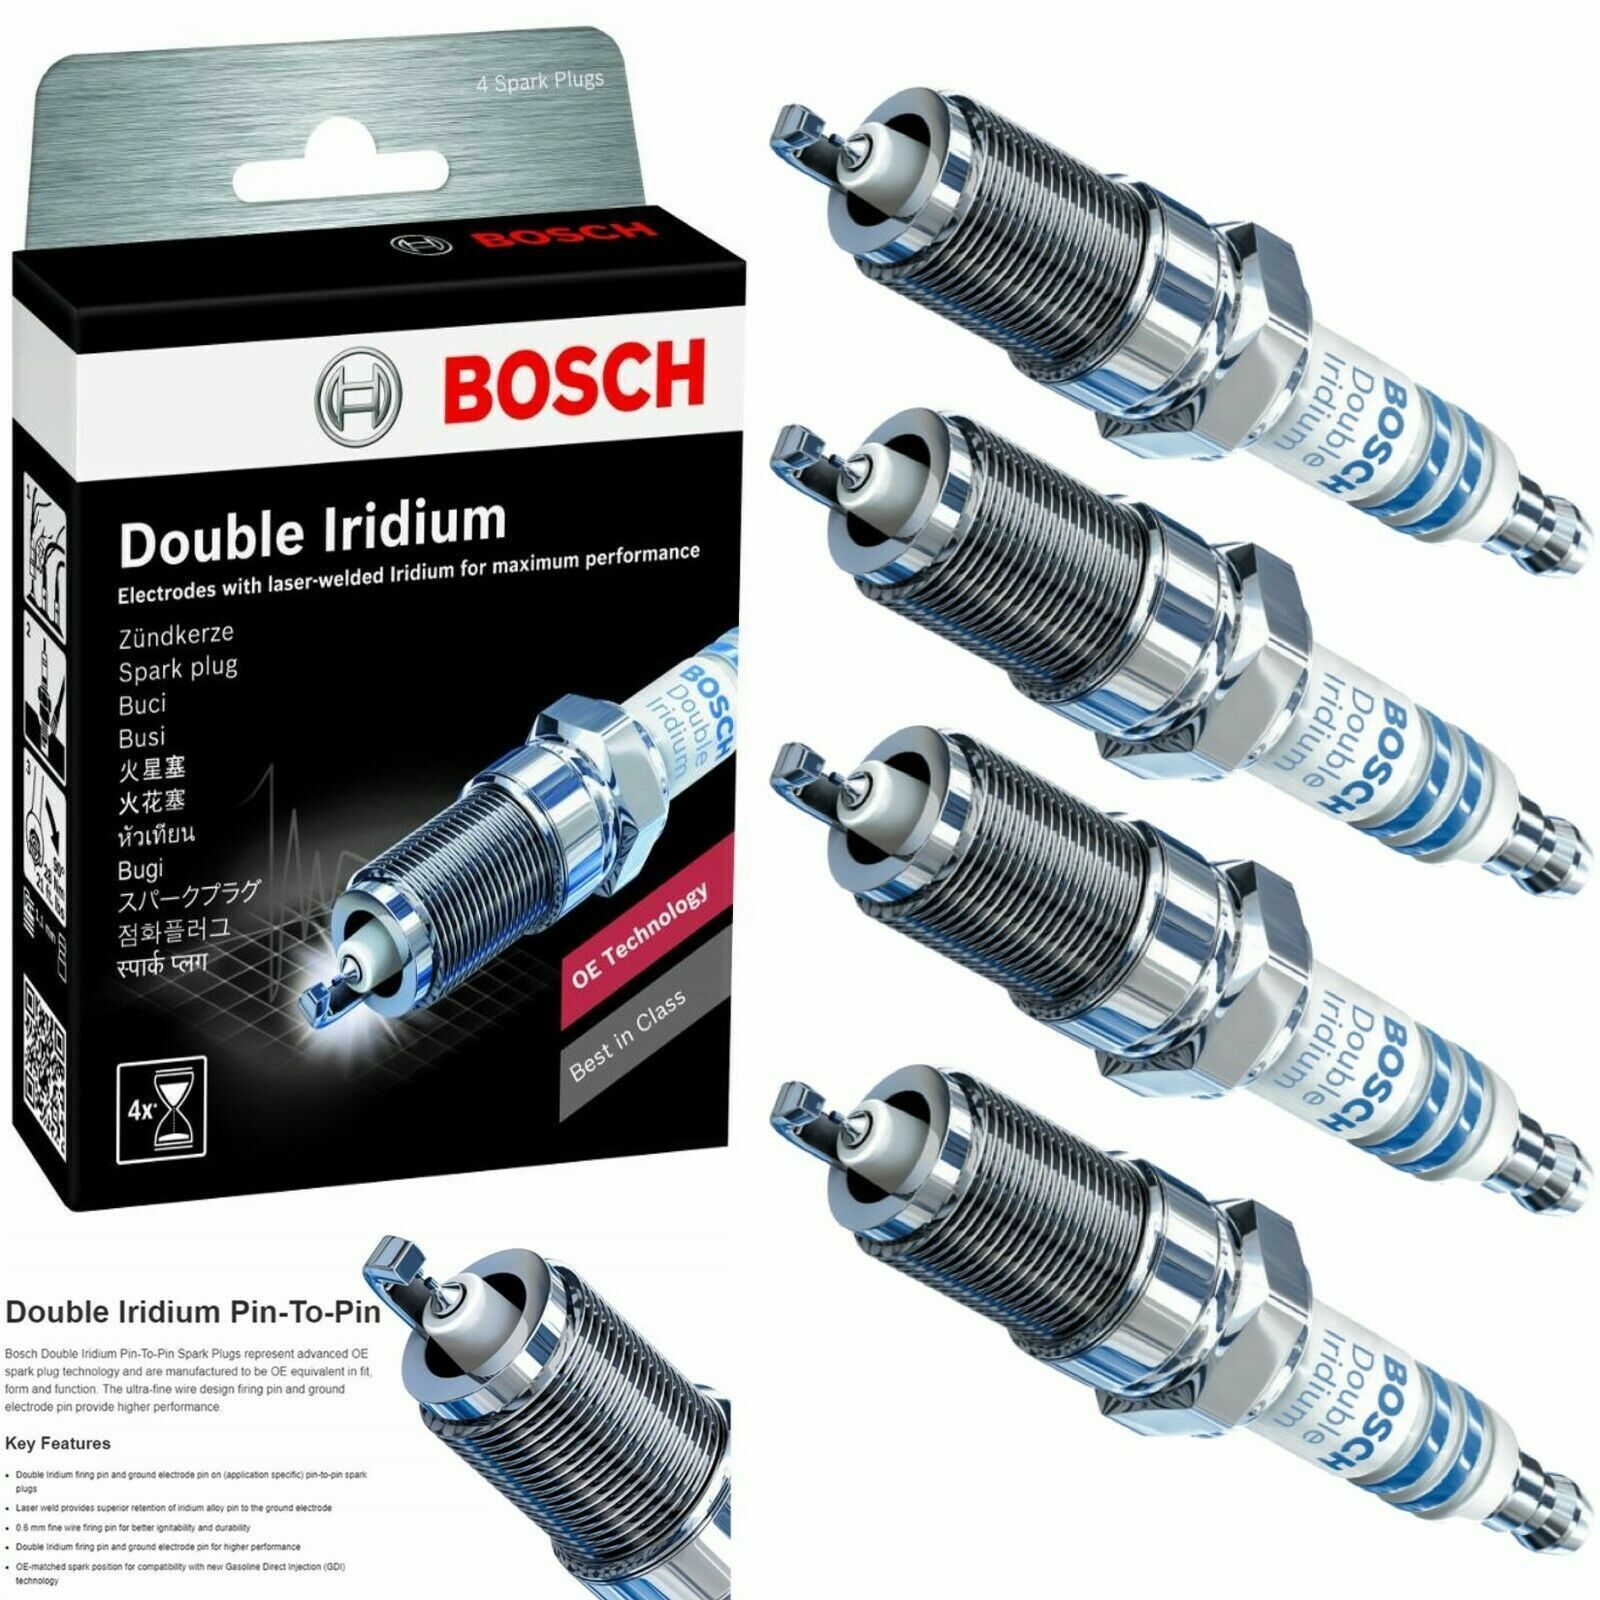 4 New Bosch Double Iridium Spark Plugs For 2008-2012 HONDA ACCORD L4-2.4L